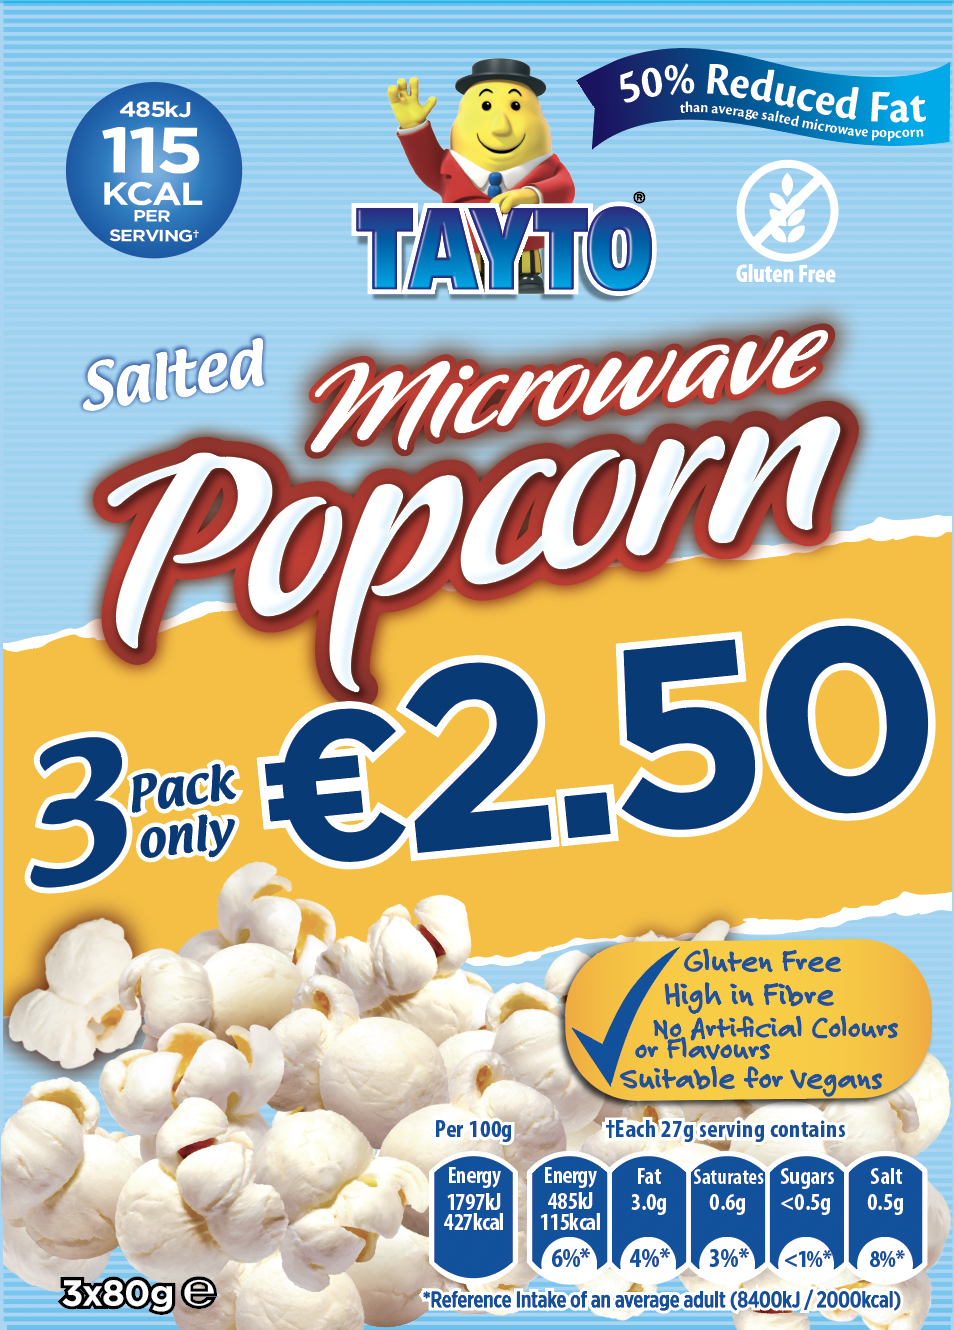 Tayto Microwave Popcorn Reduced Fat